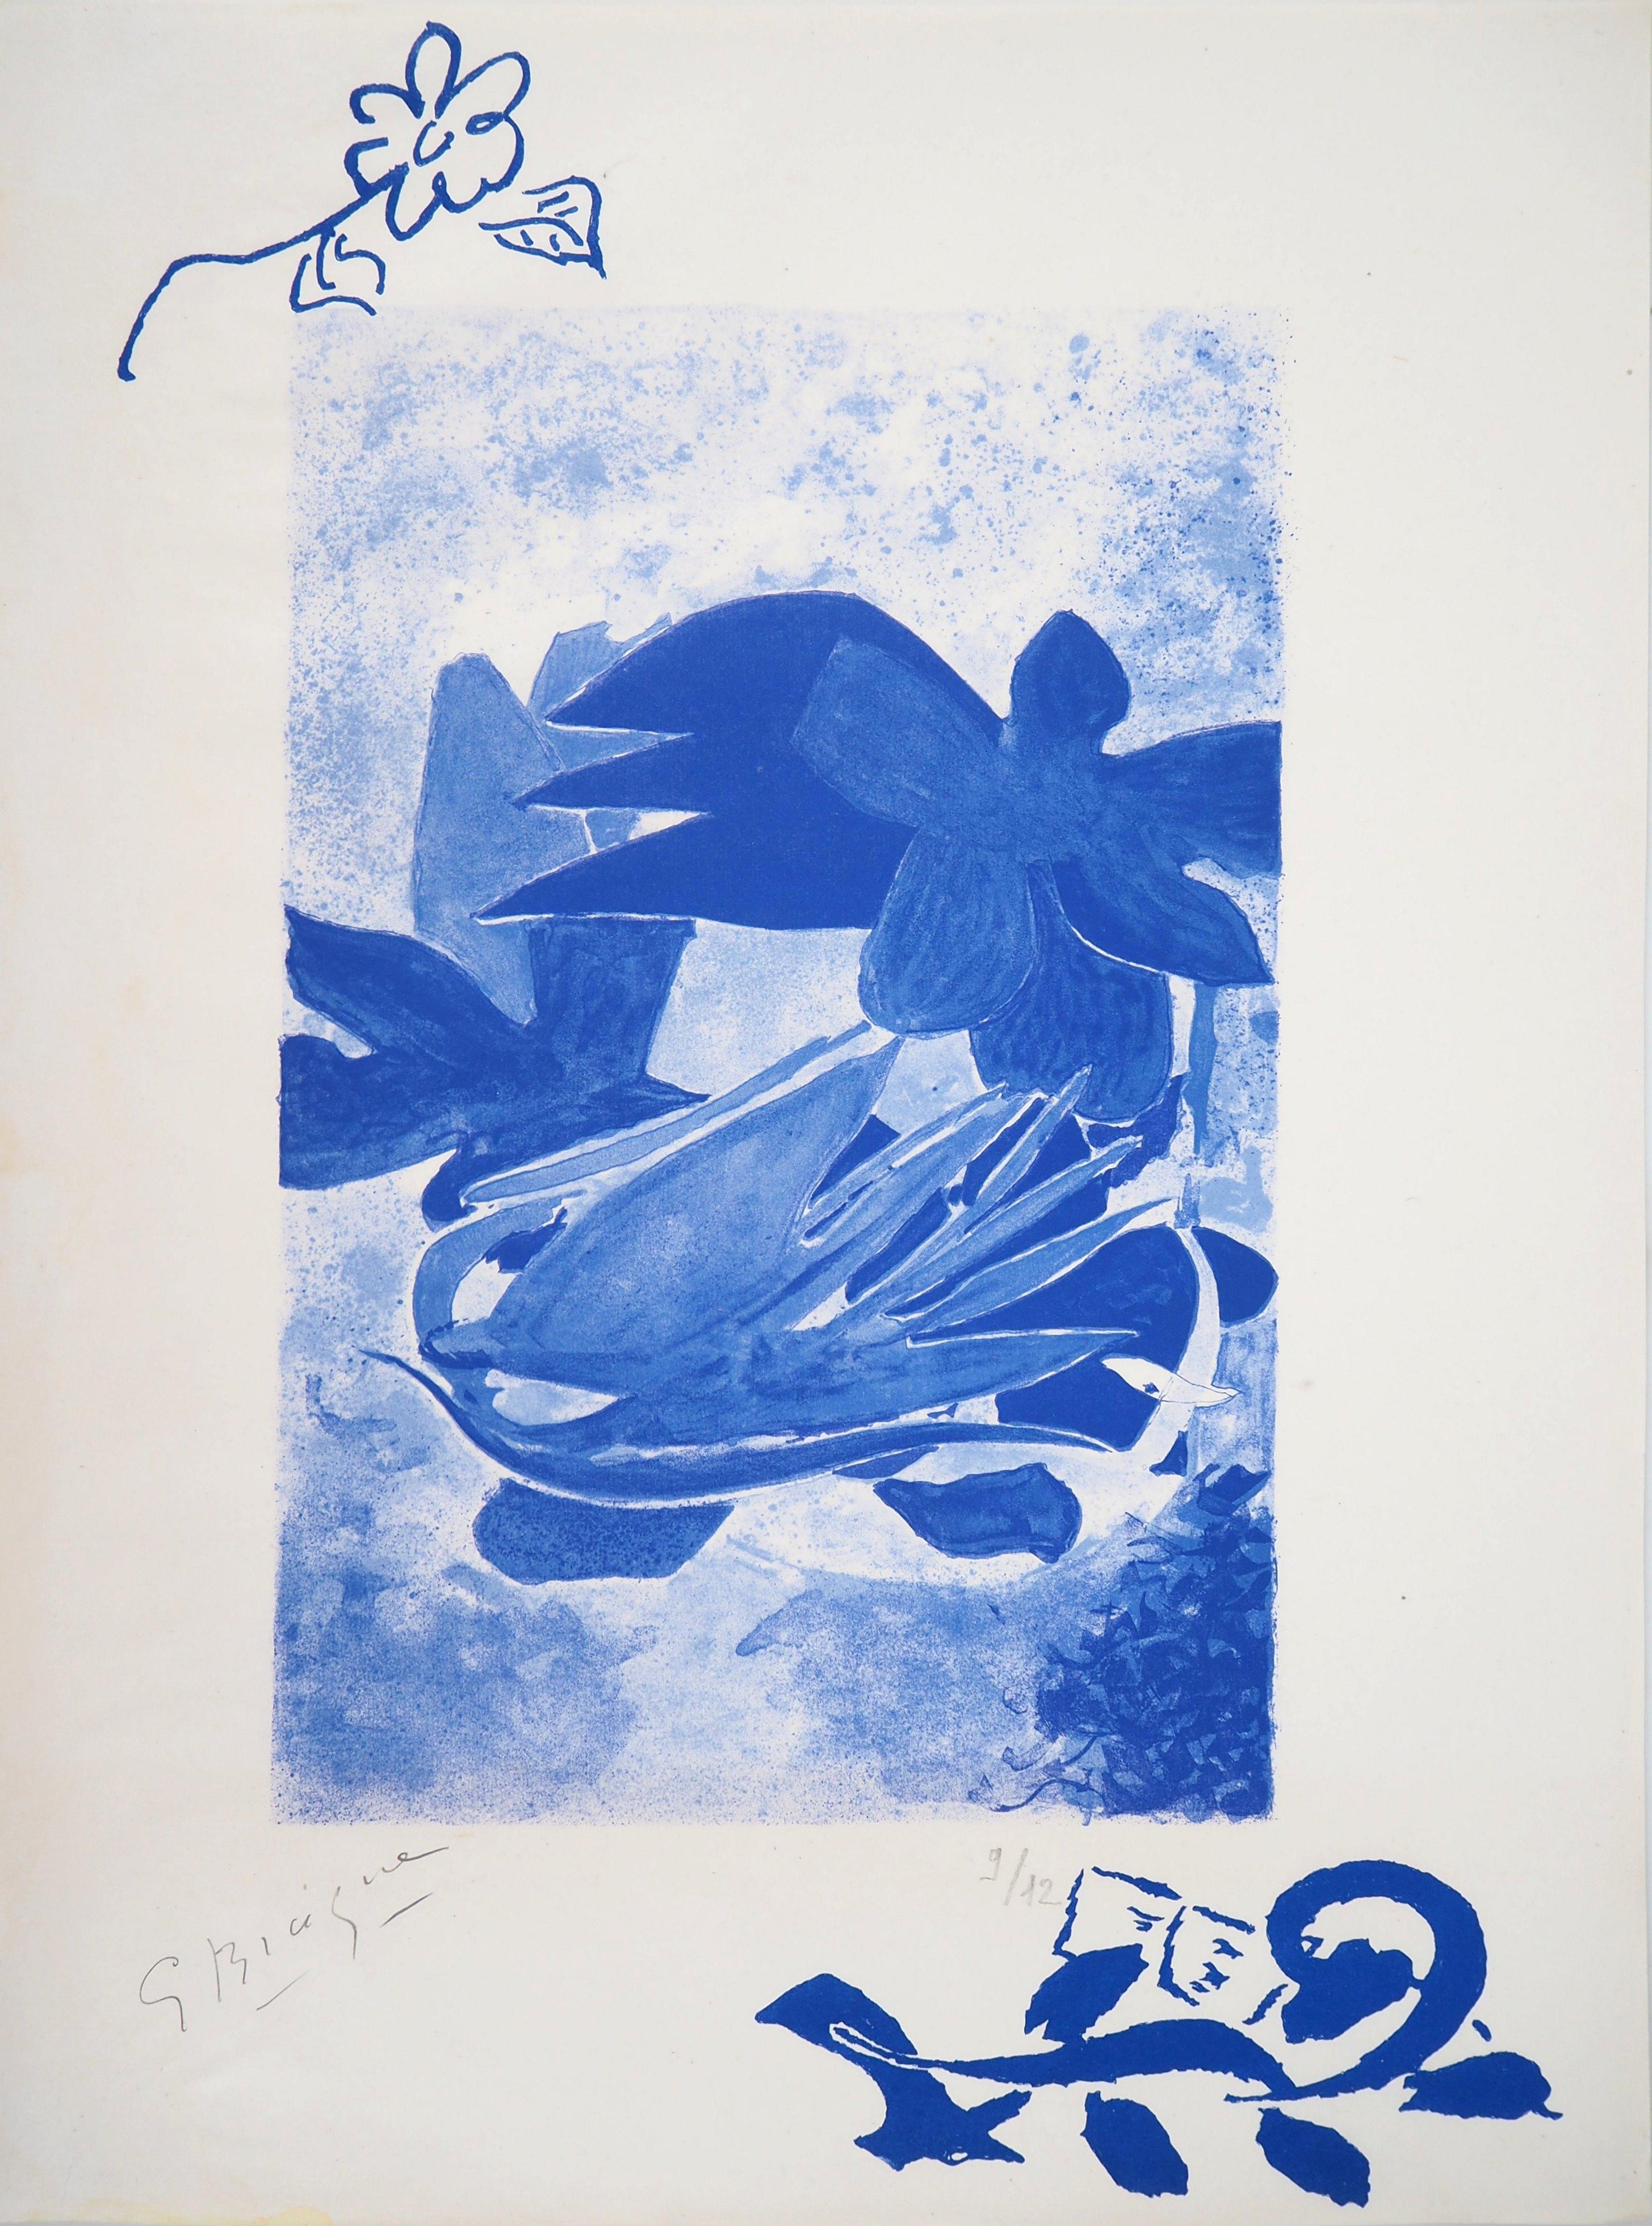 Georges Braque Landscape Print - Blue Water Lilies - Original lithograph, hand signed (Mourlot)